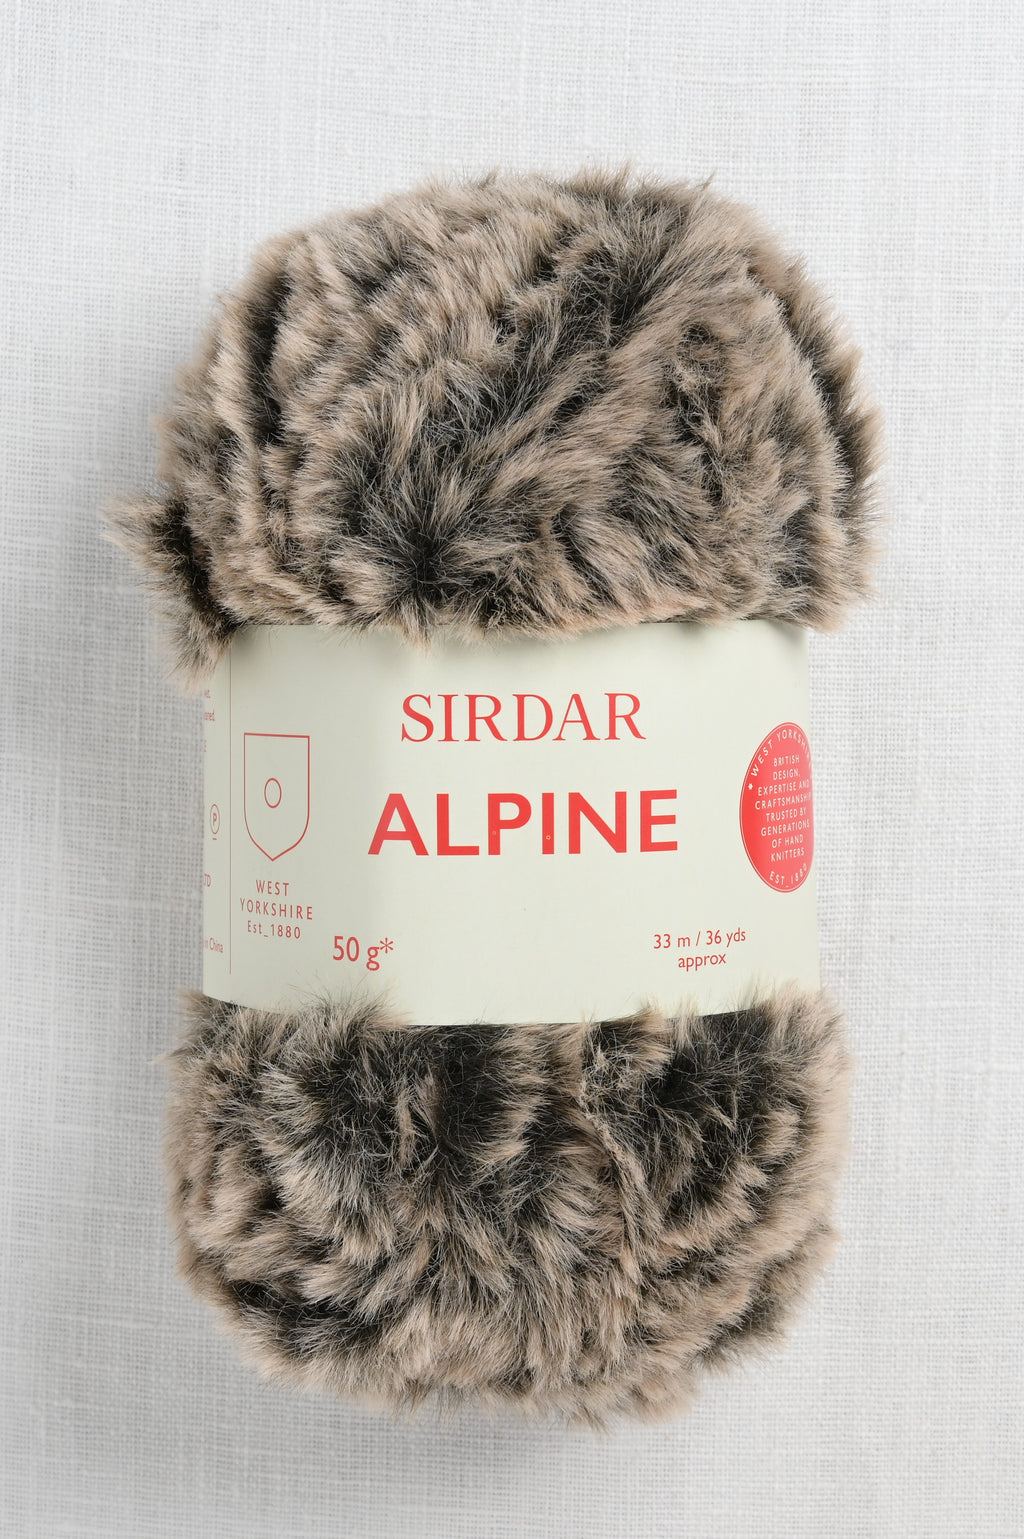 sirdar alpine 0403 brindle